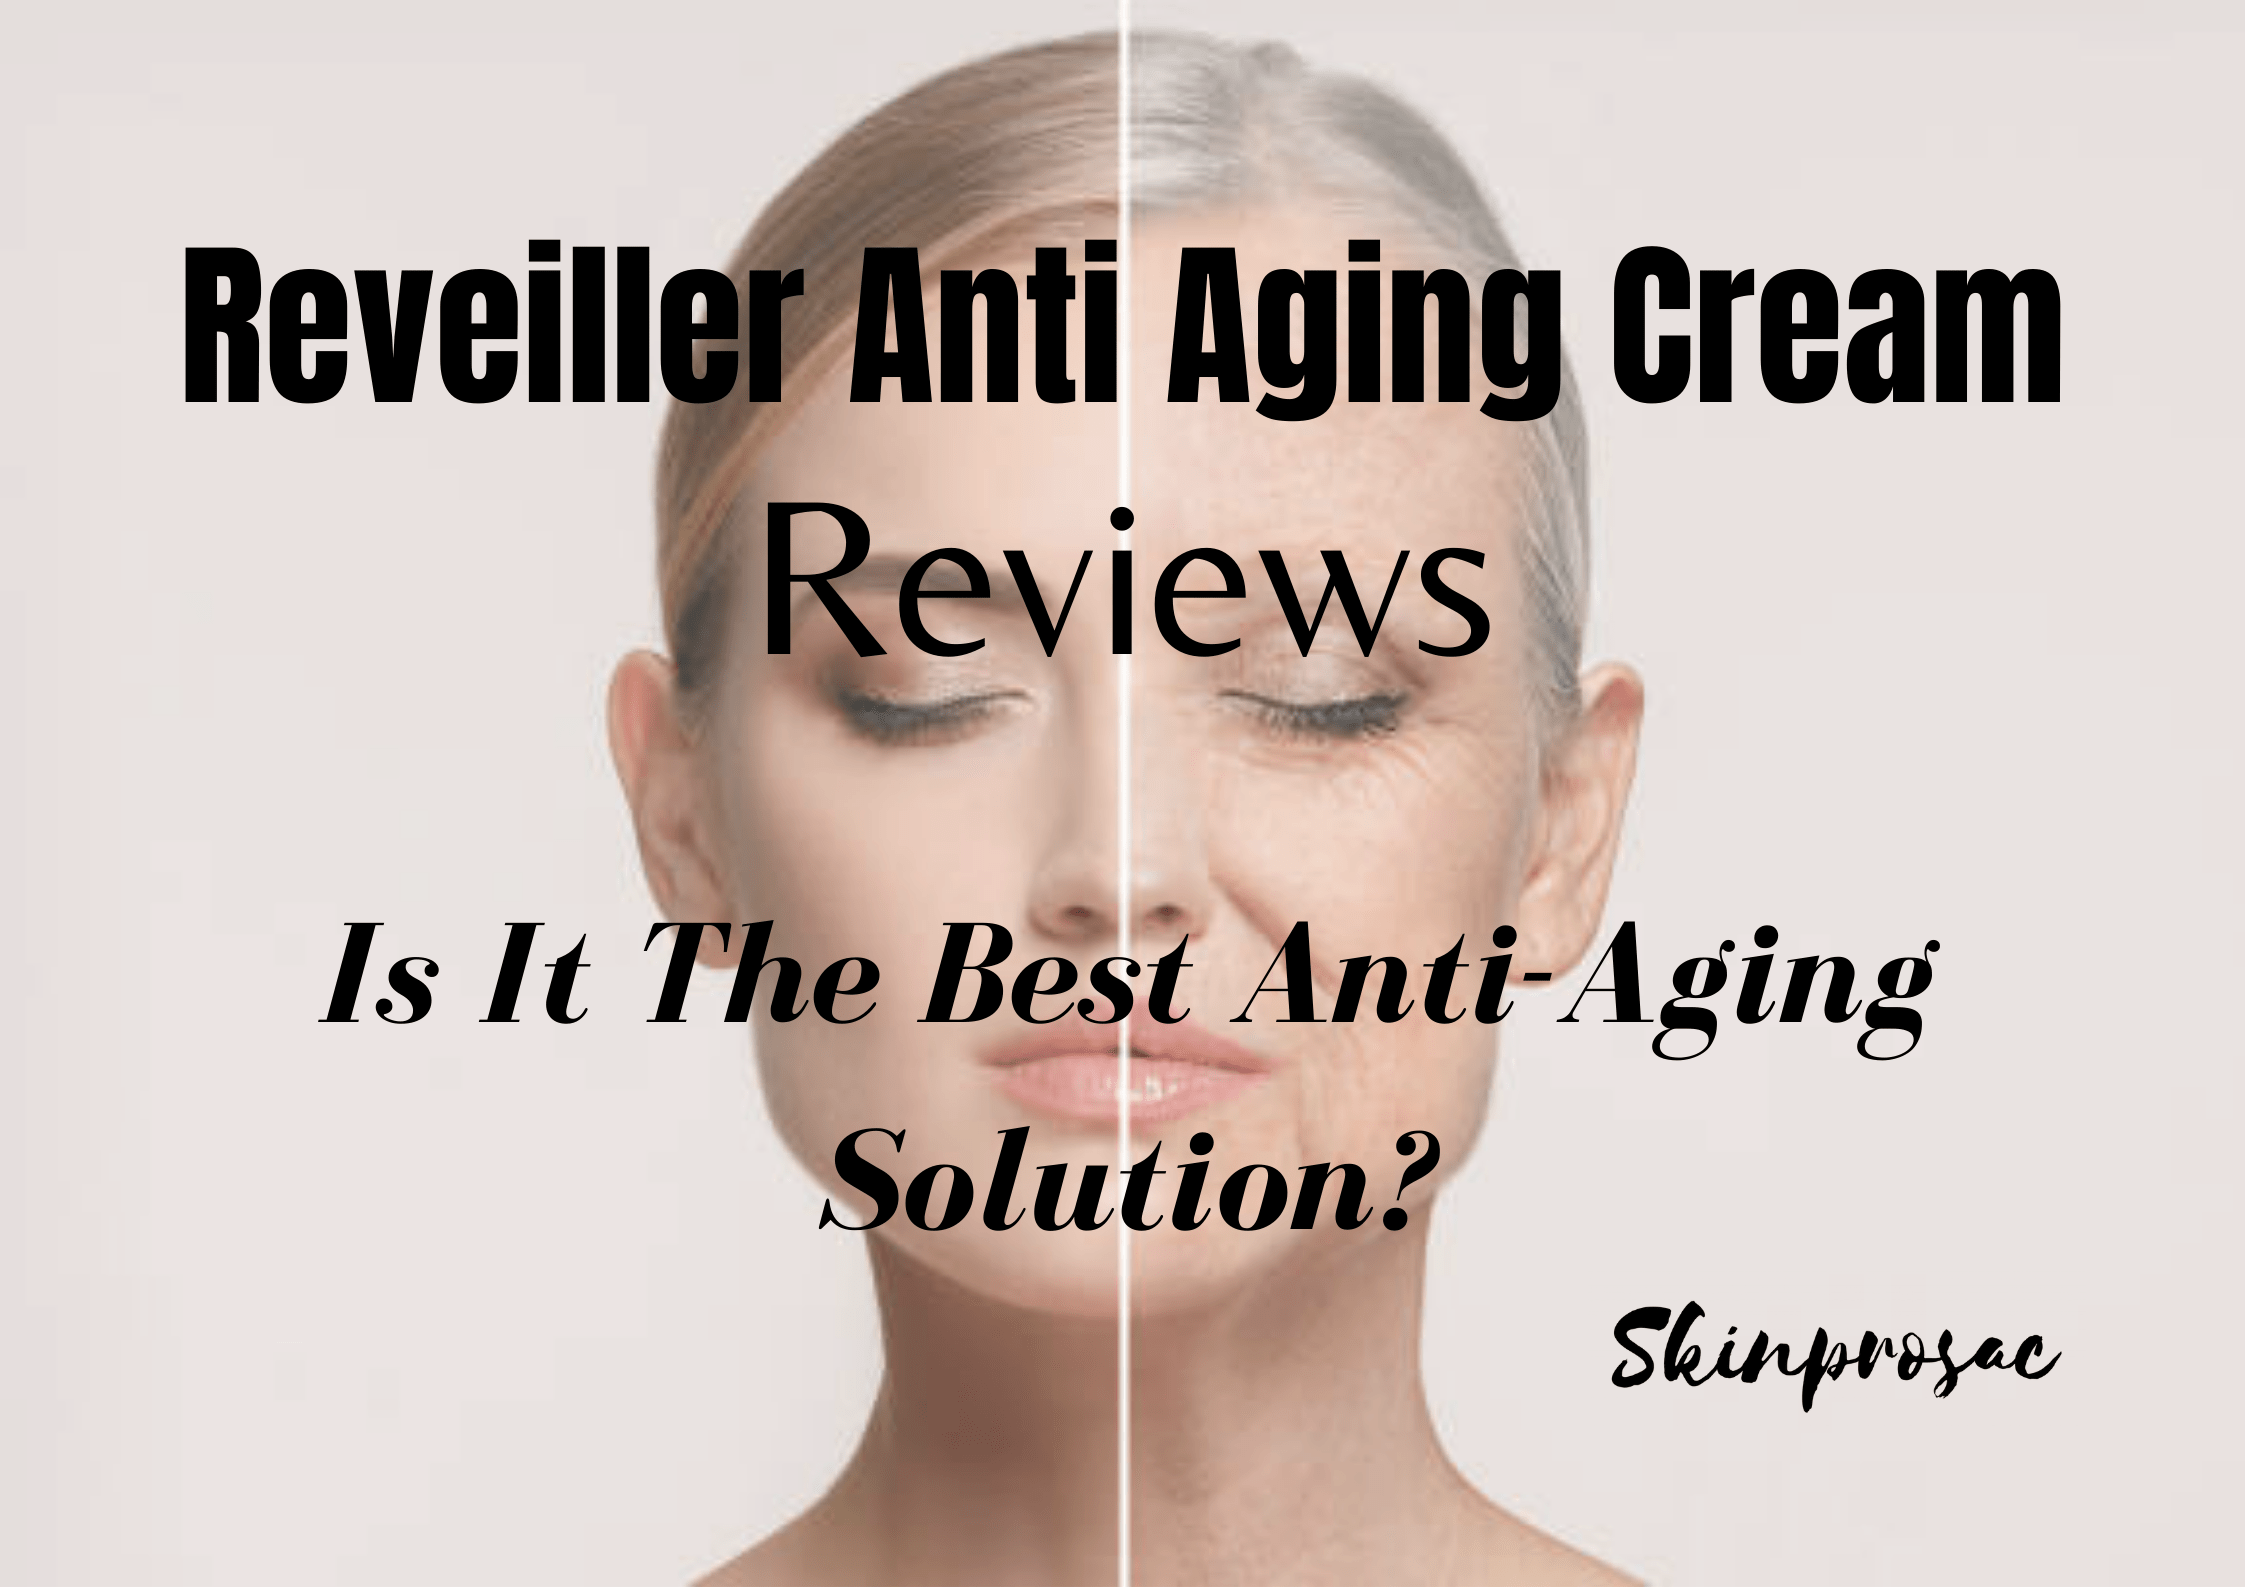 Reveiller Anti Aging Cream Reviews